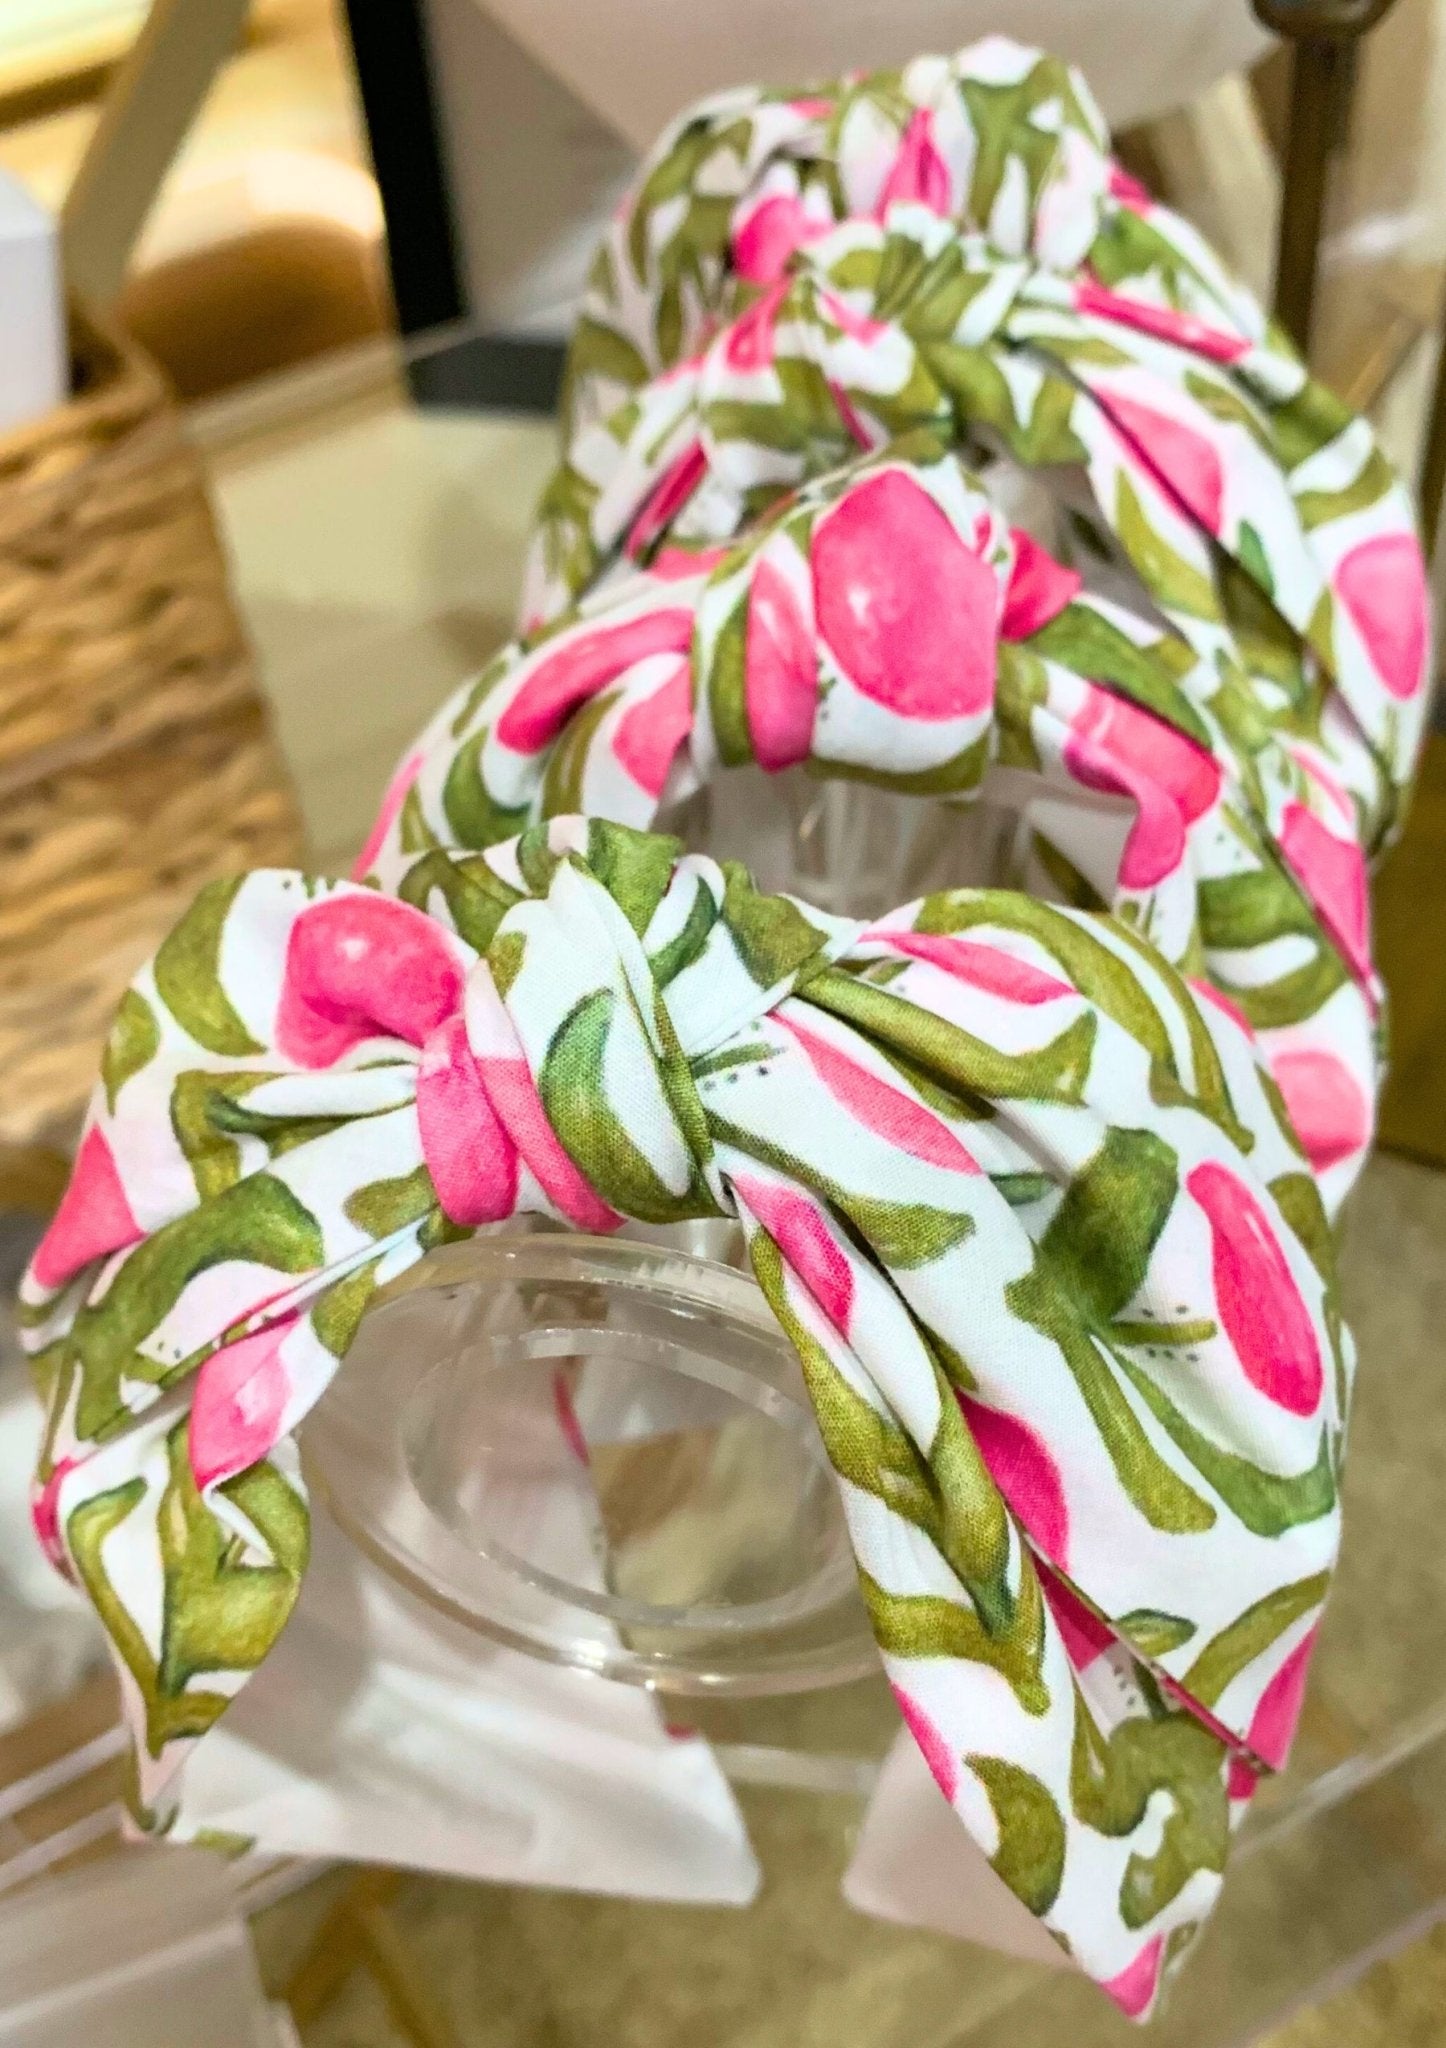 Abrooke-wright-headband-pink-tulip-floral-accessories-headbands-georgia-kate